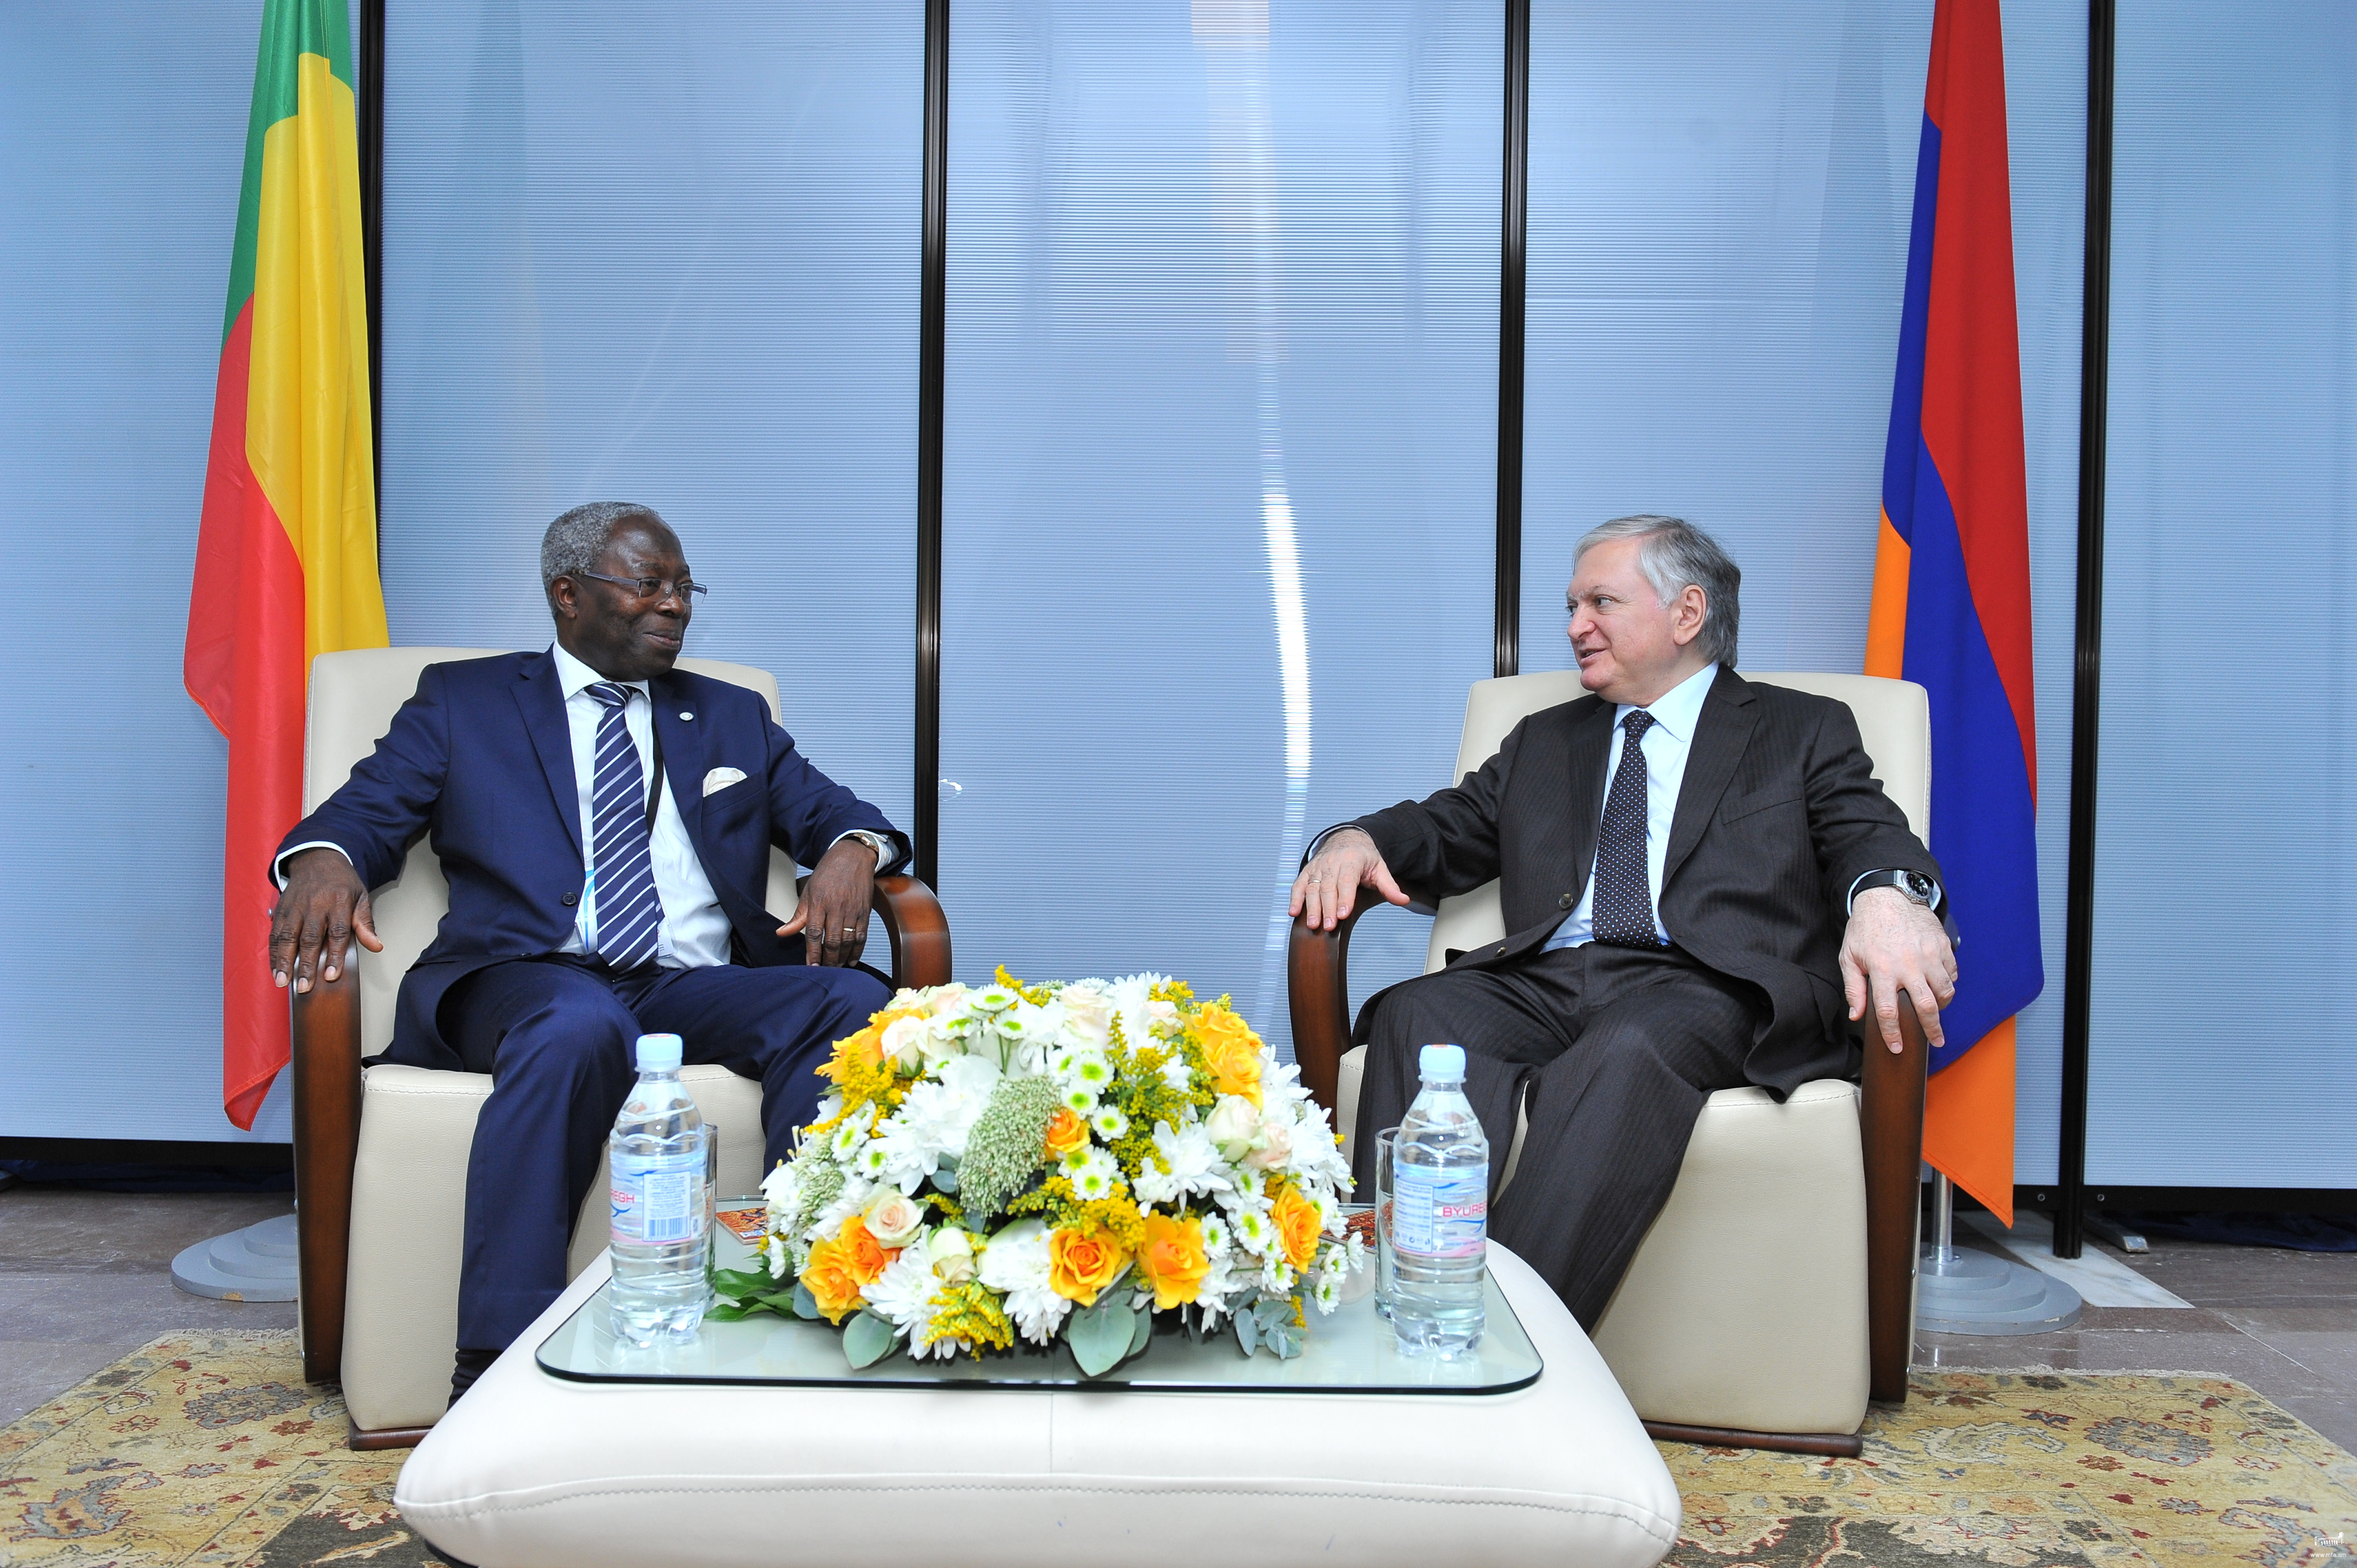 Meeting of FMs of Armenia and Benin